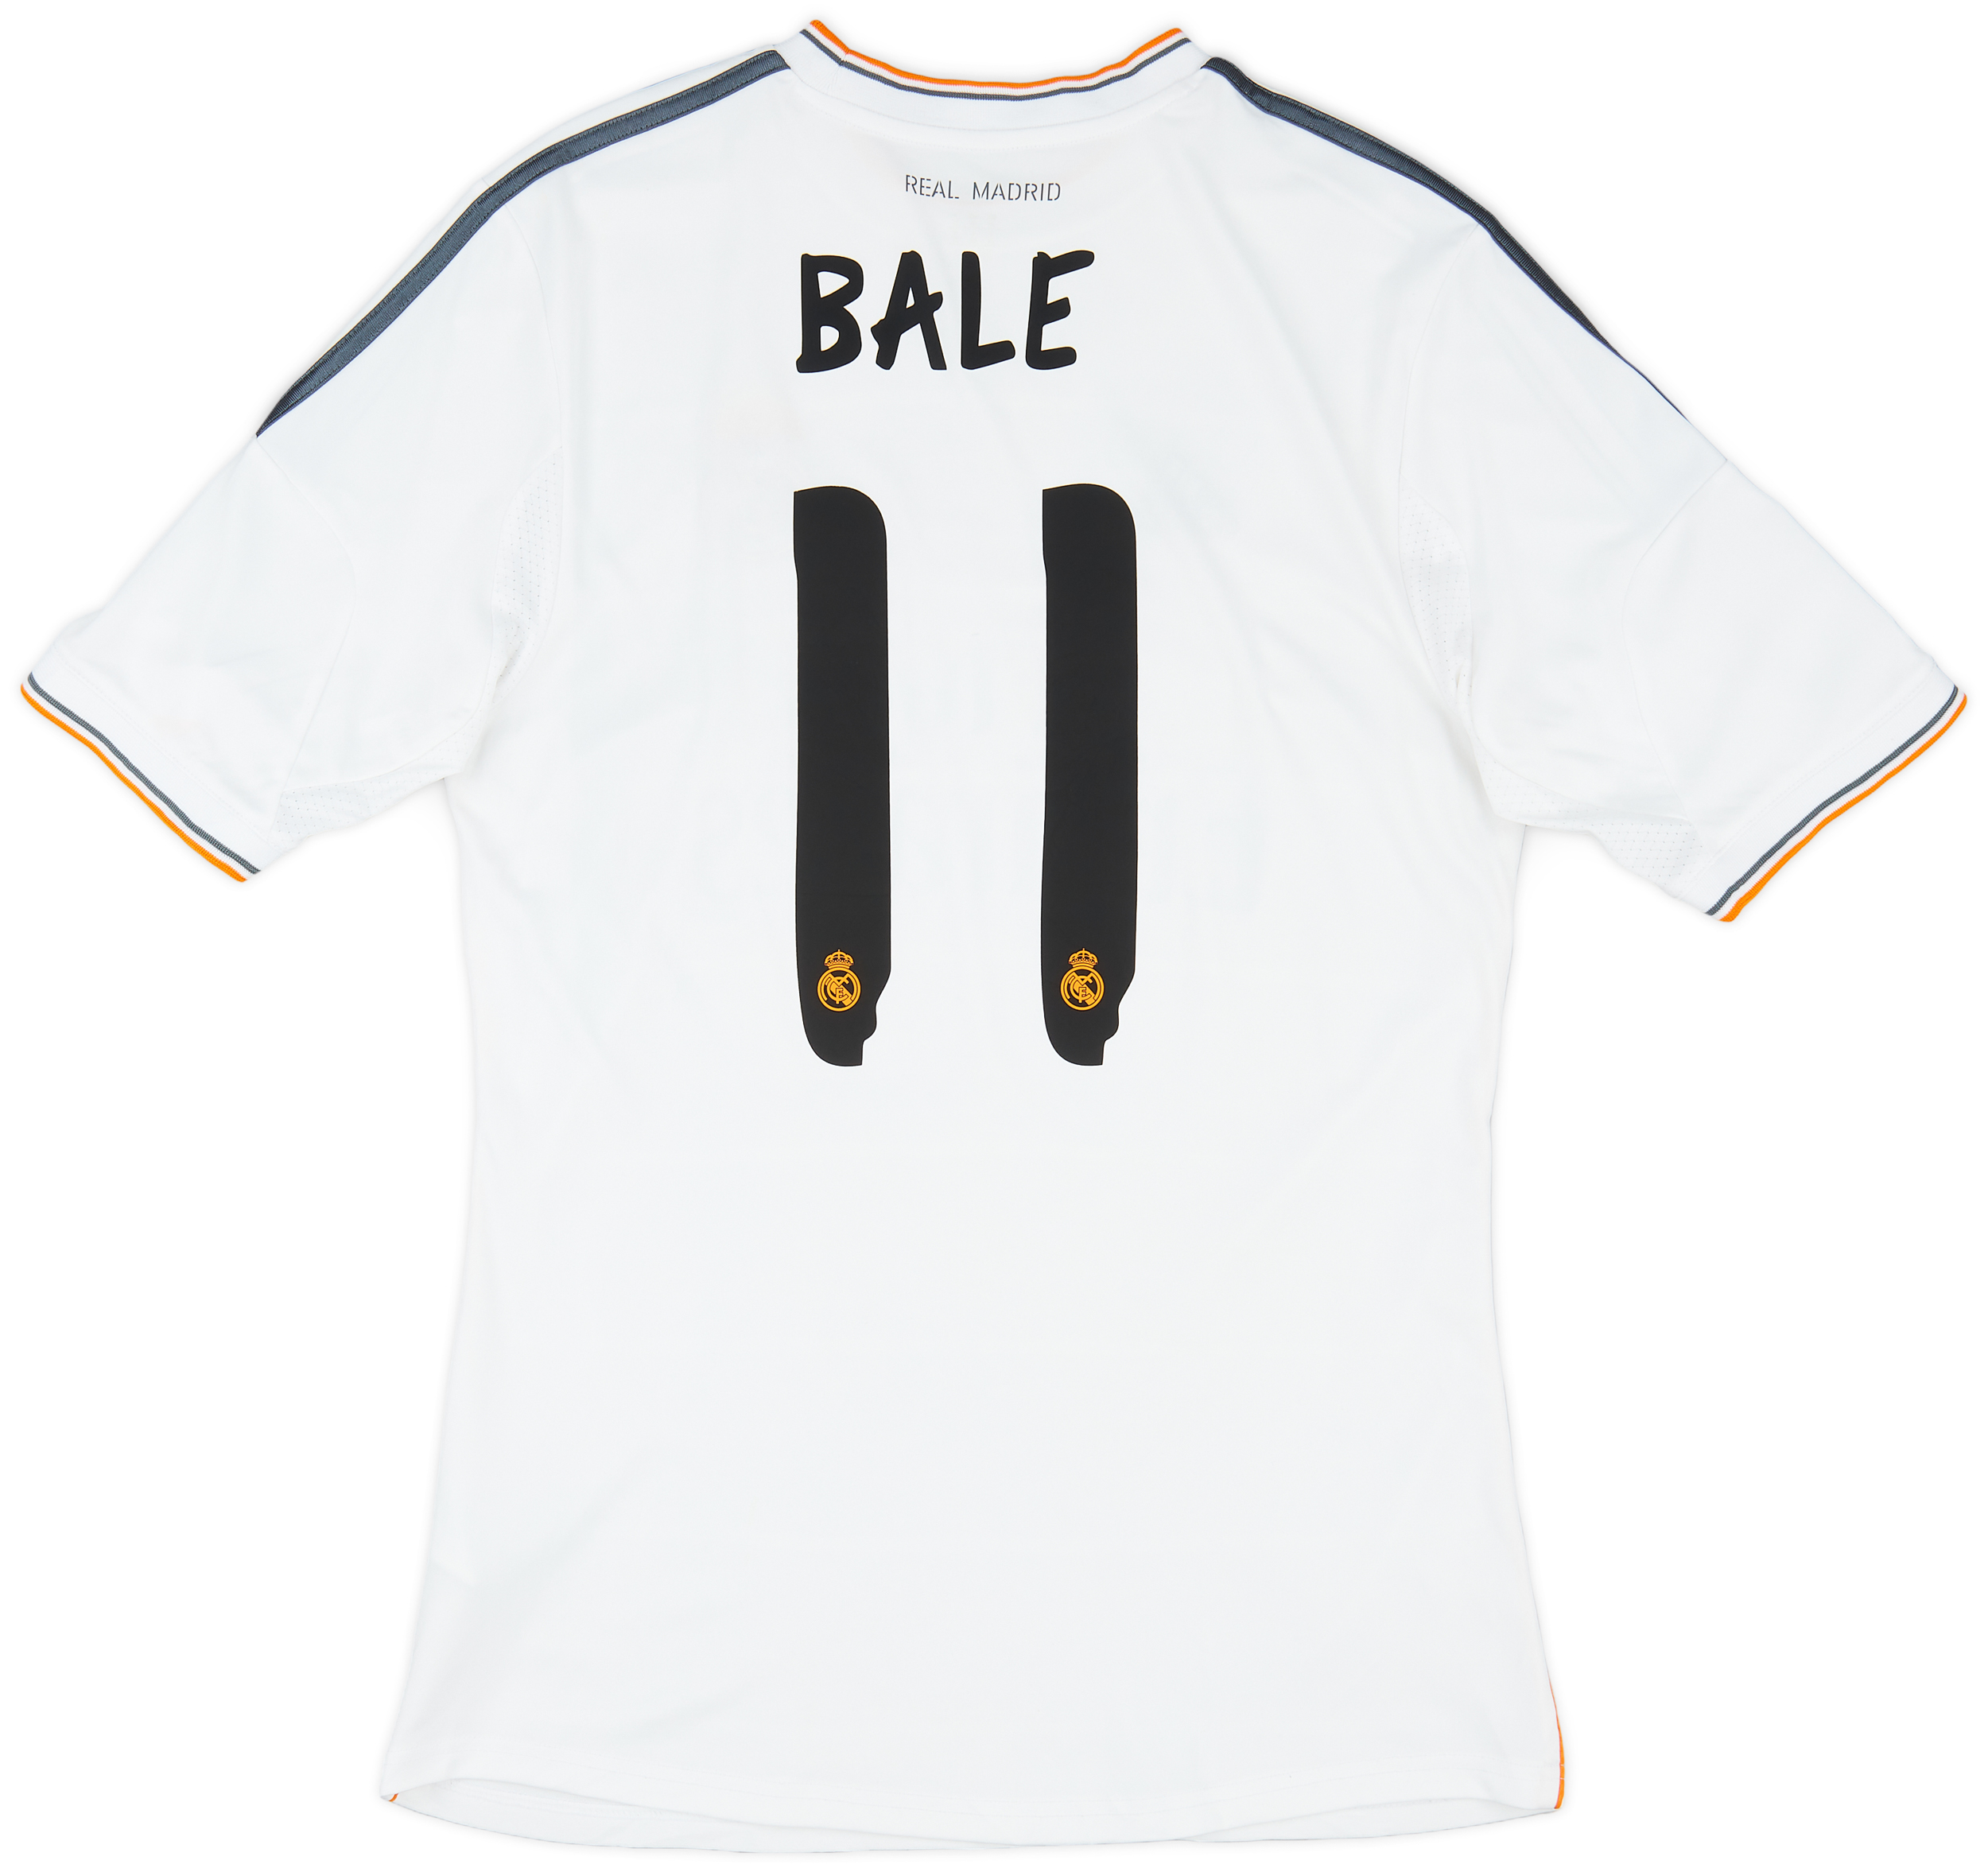 2013-14 Real Madrid Home Shirt Bale #11 - 8/10 - (M)